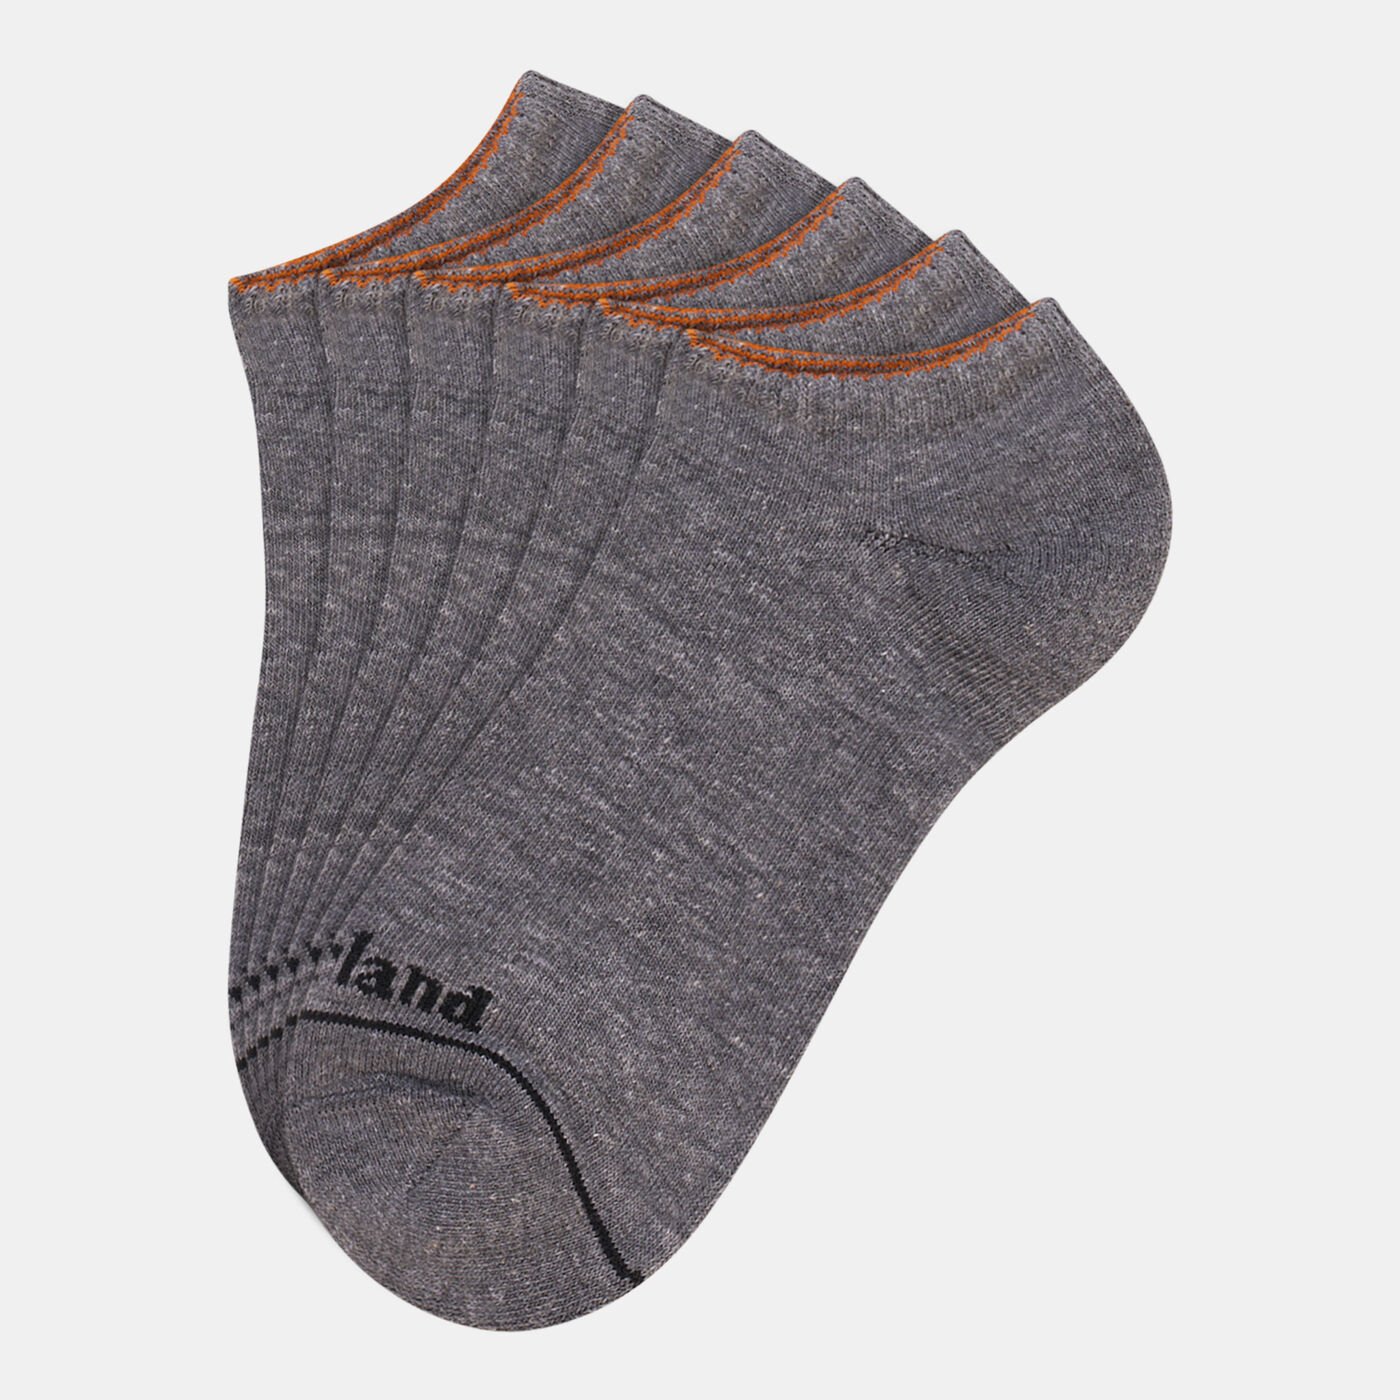 Ocean Grove Core No-Show Socks (3 Pairs)